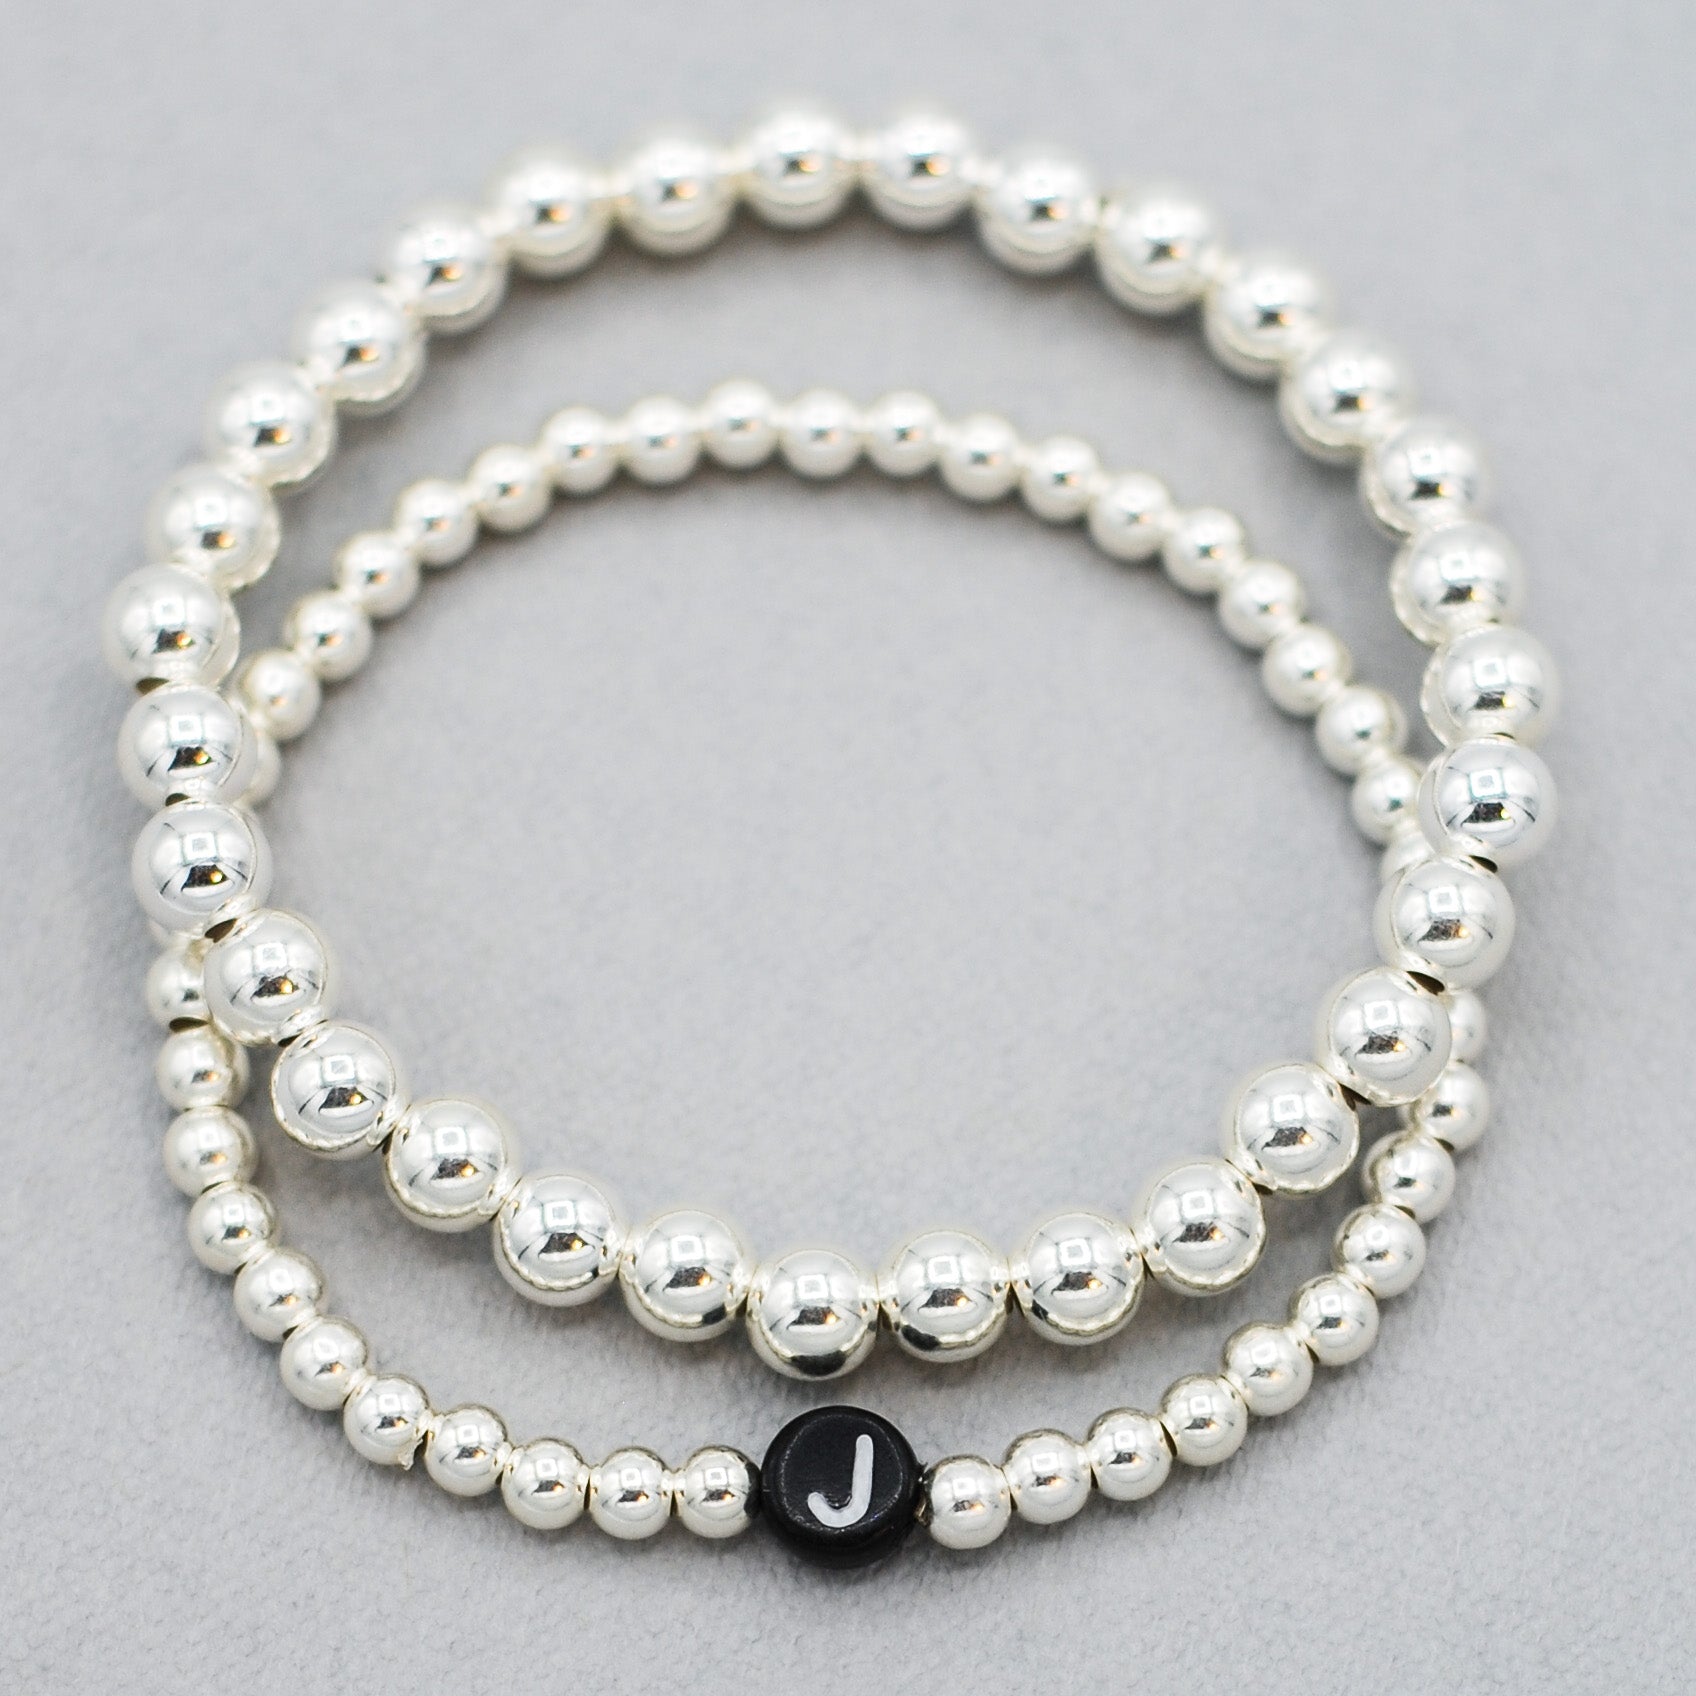 Beaded Lux Initial Bracelet Set - Jewel Ya